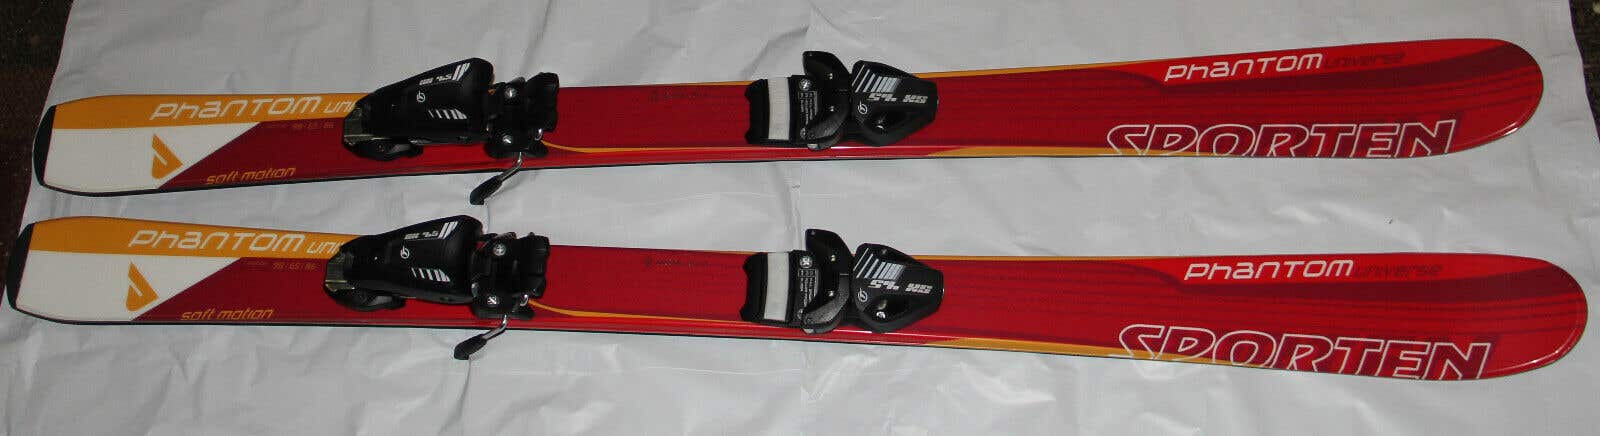 NEW Junior kids skis 118cm Sporten Red + Tyrolia size adjustable Bindings pair